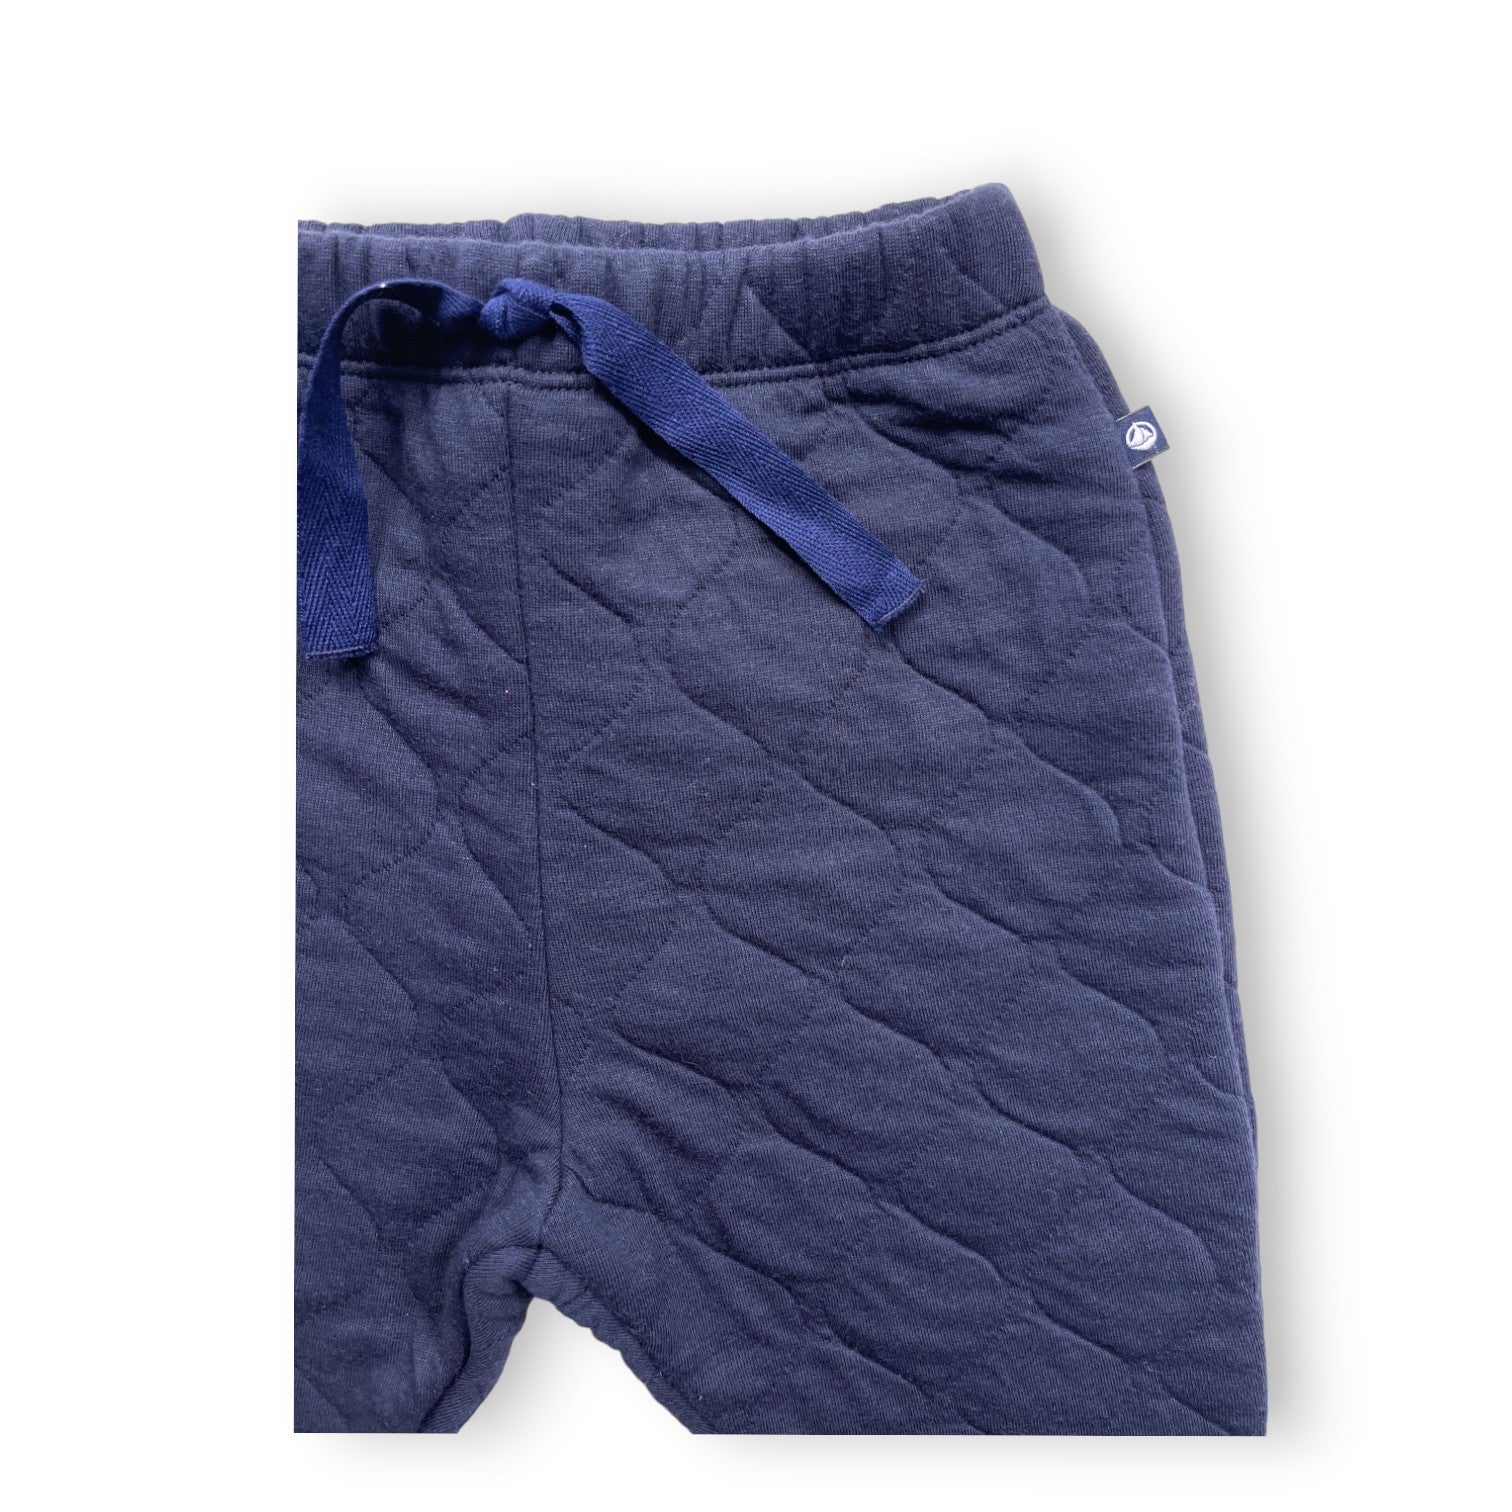 PETIT BATEAU - Pantalon bleu marine en molleton (neuf) - 18 mois